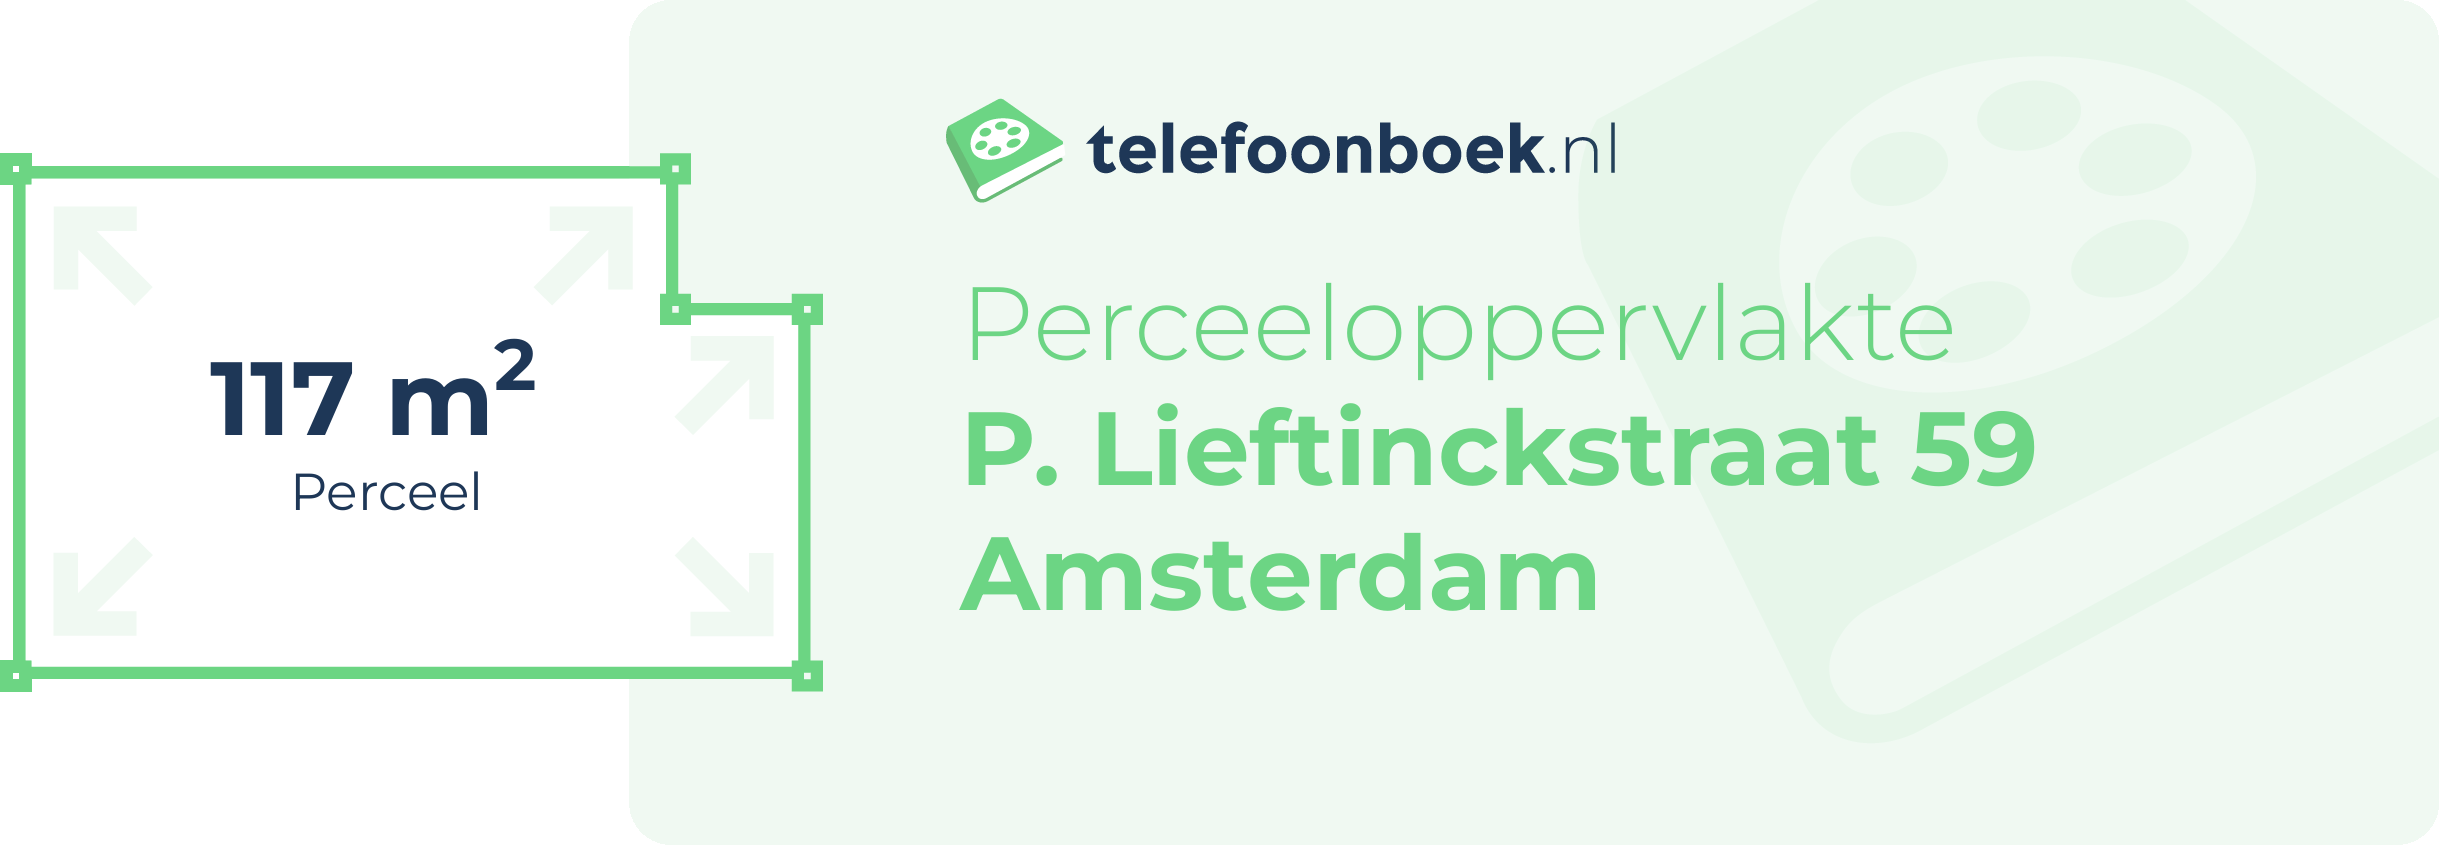 Perceeloppervlakte P. Lieftinckstraat 59 Amsterdam